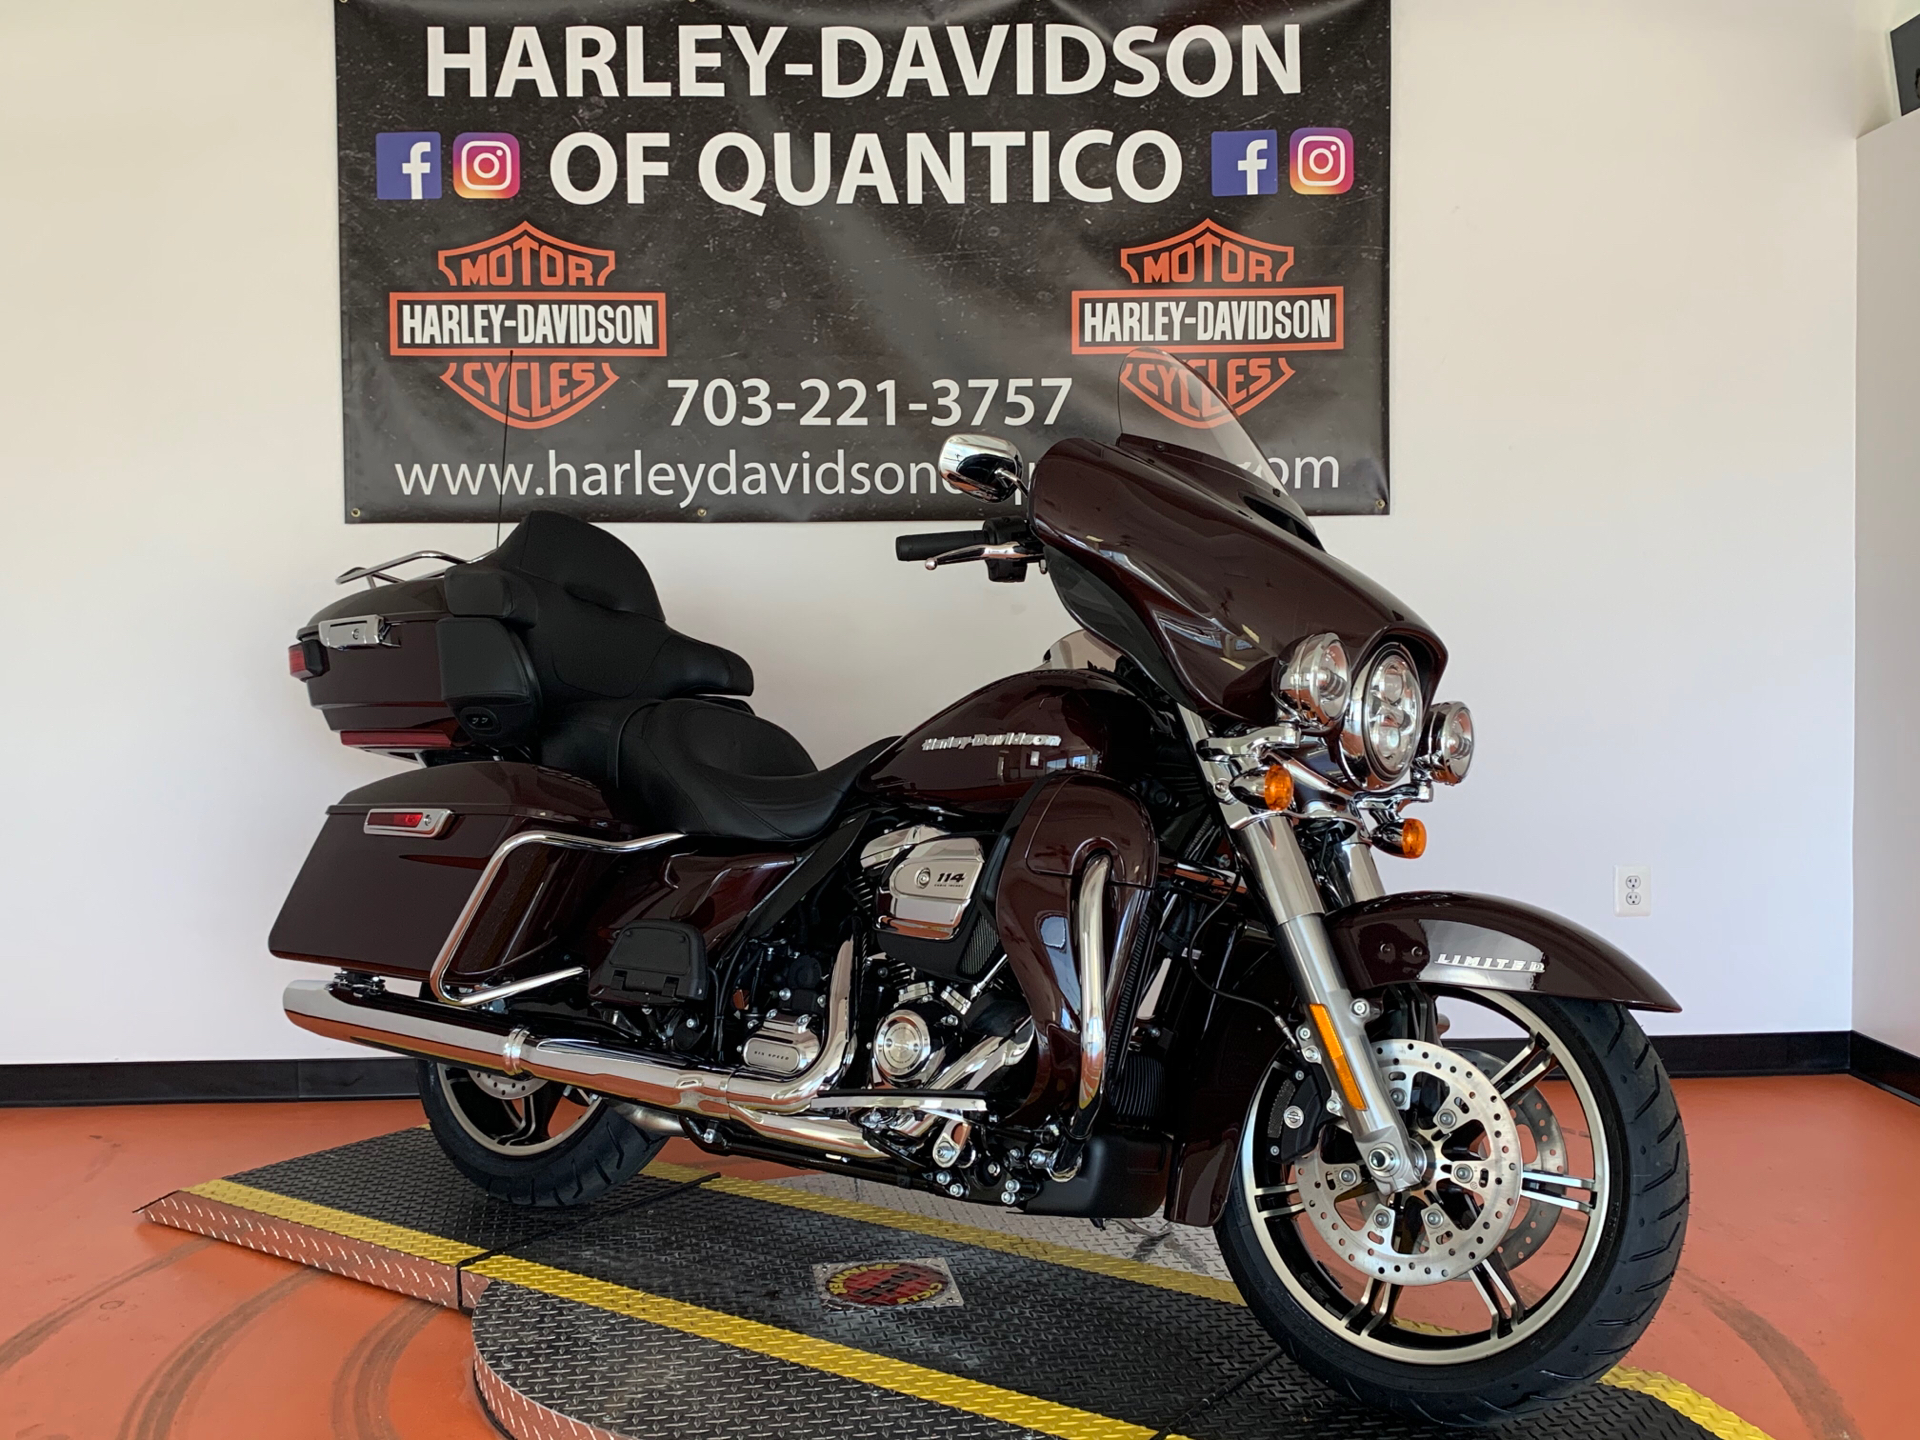 New 2021 Harley Davidson Limited Midnight Crimson Motorcycles In Dumfries Va 558rimson